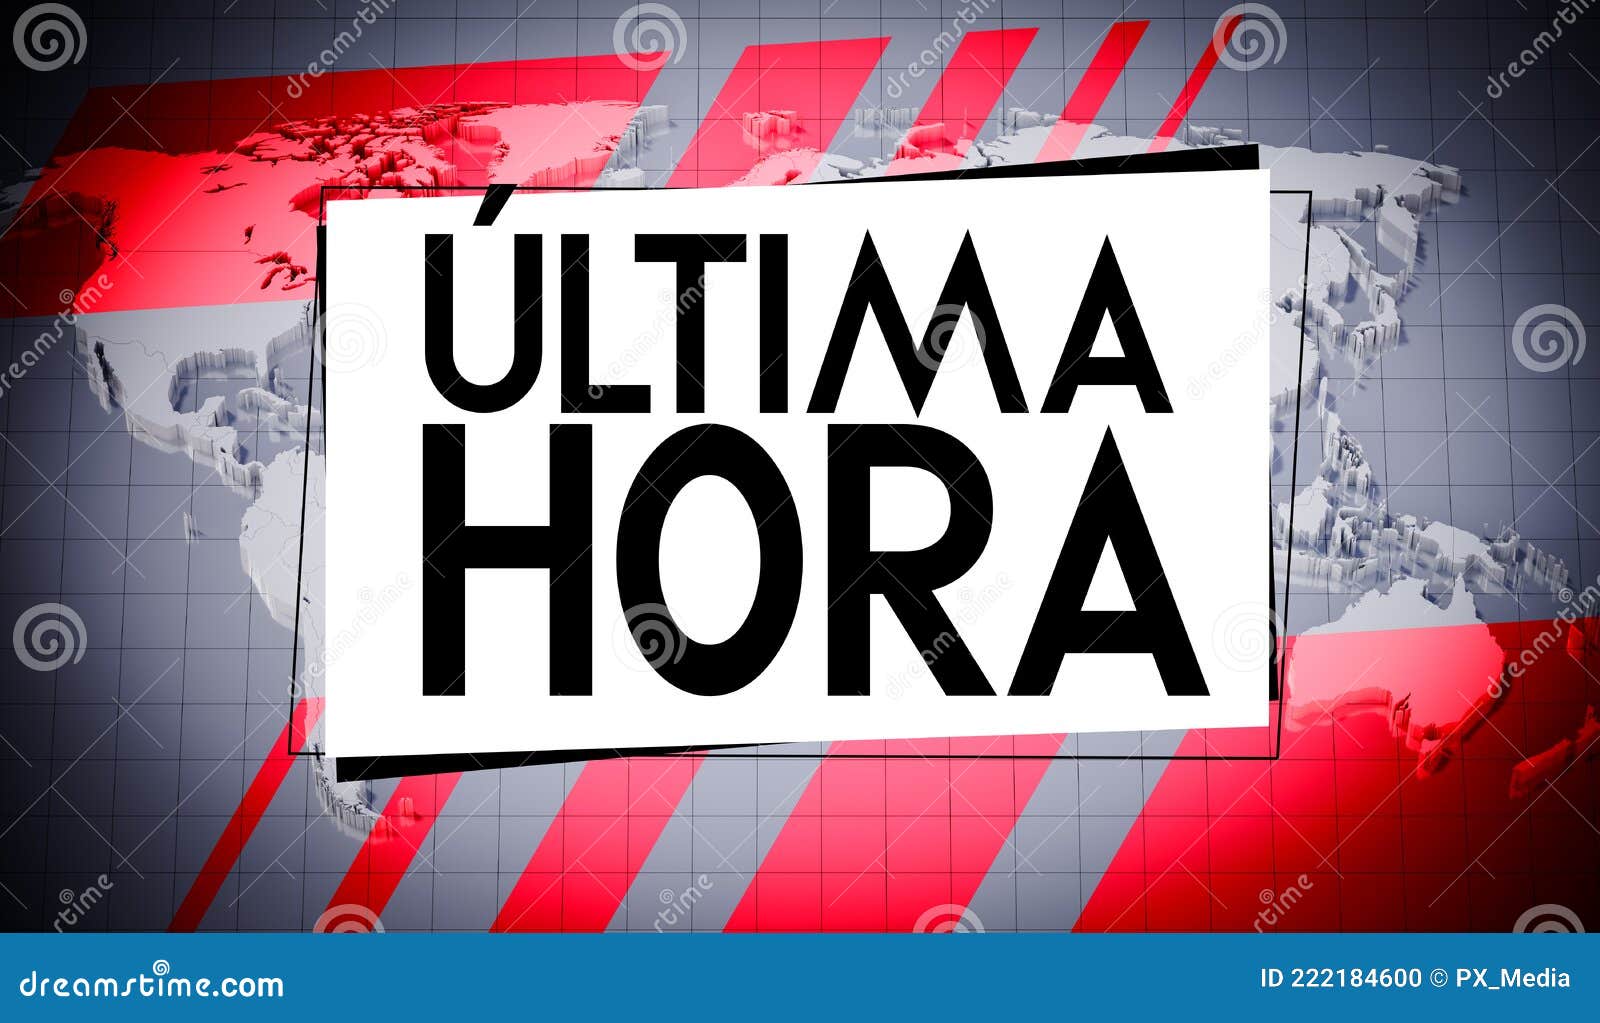 ultima hora spanish / breaking news english, world map in background